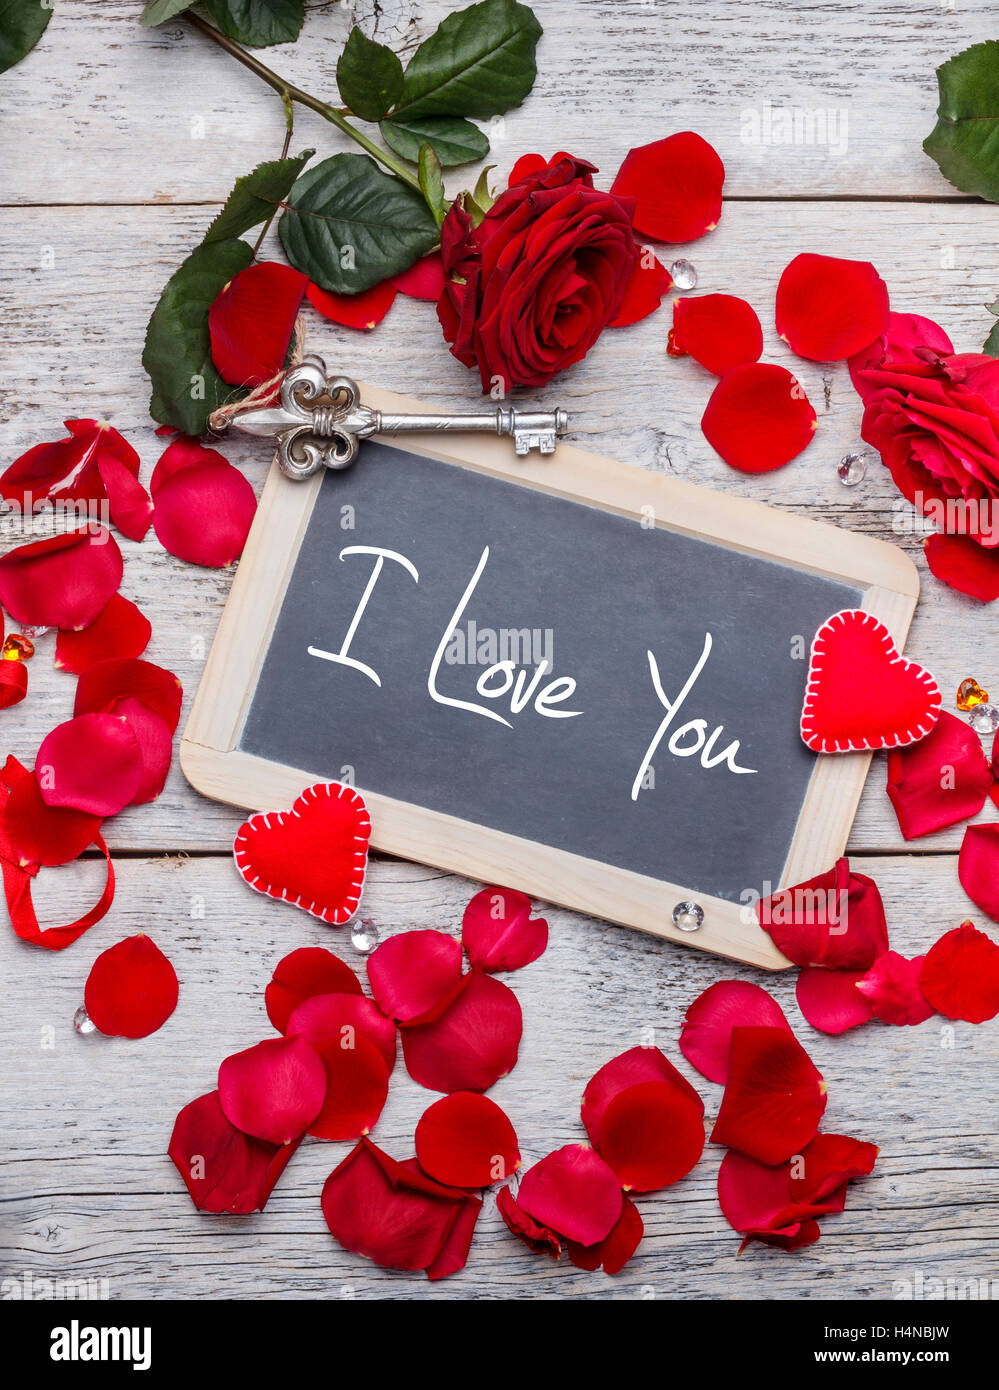 I Love You. Handwritten message on a chalkboard Stock Photo